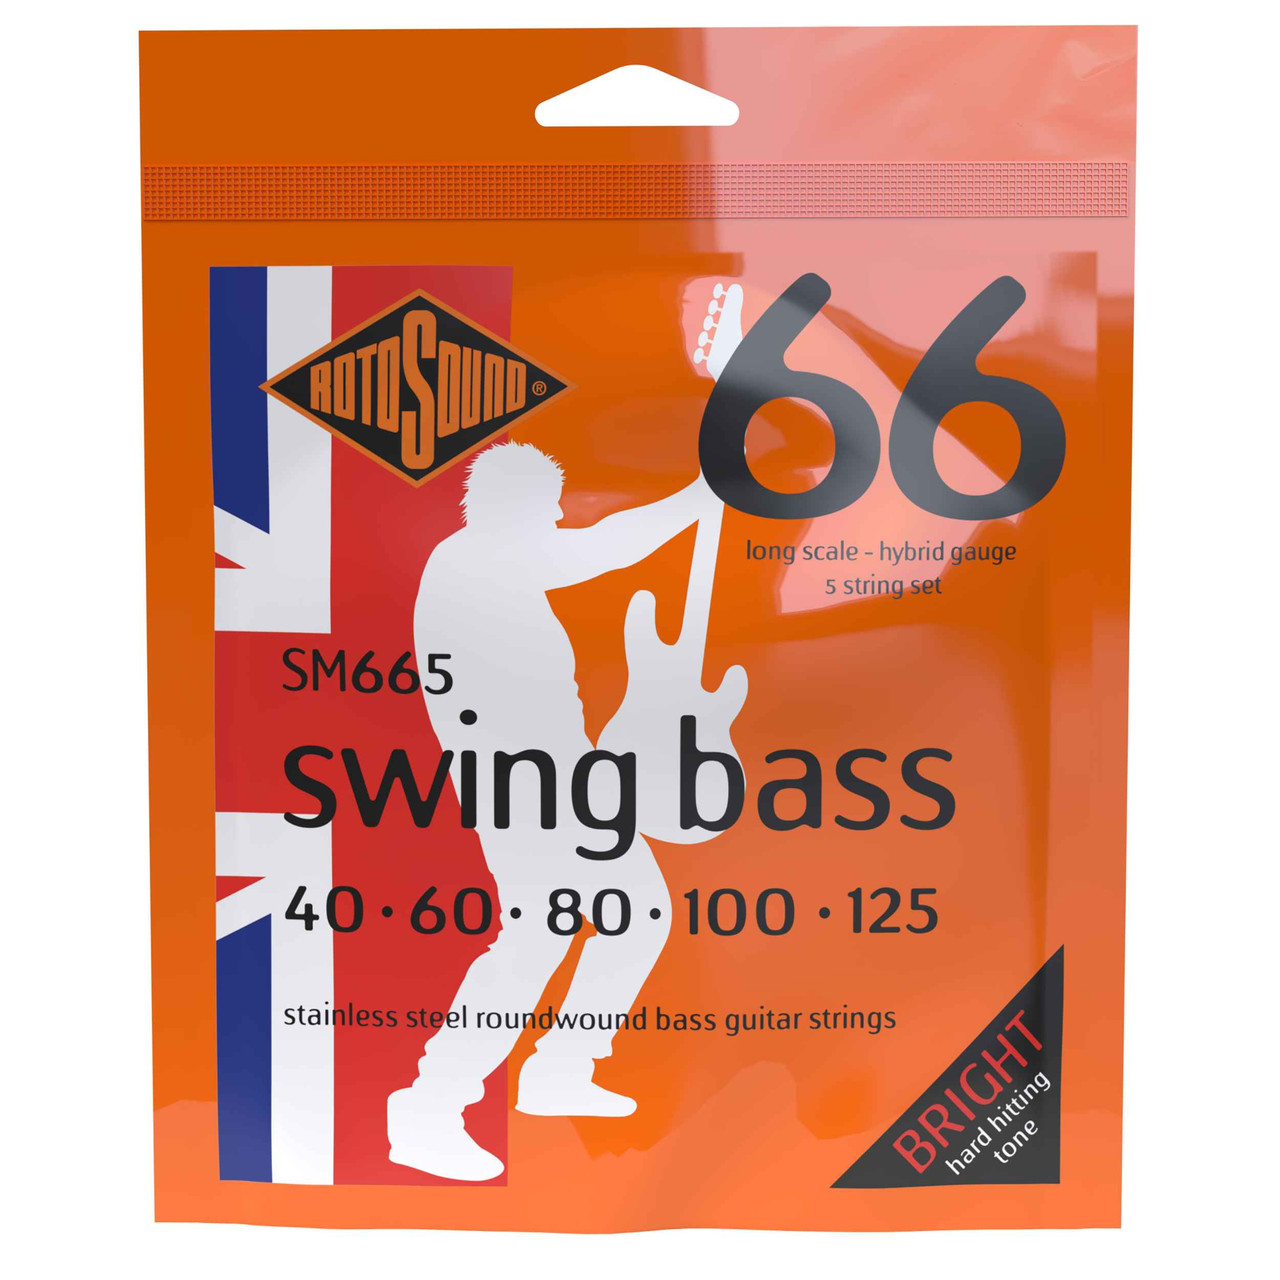 Rotosound 5-String Swing 66 Bass Guitar Strings